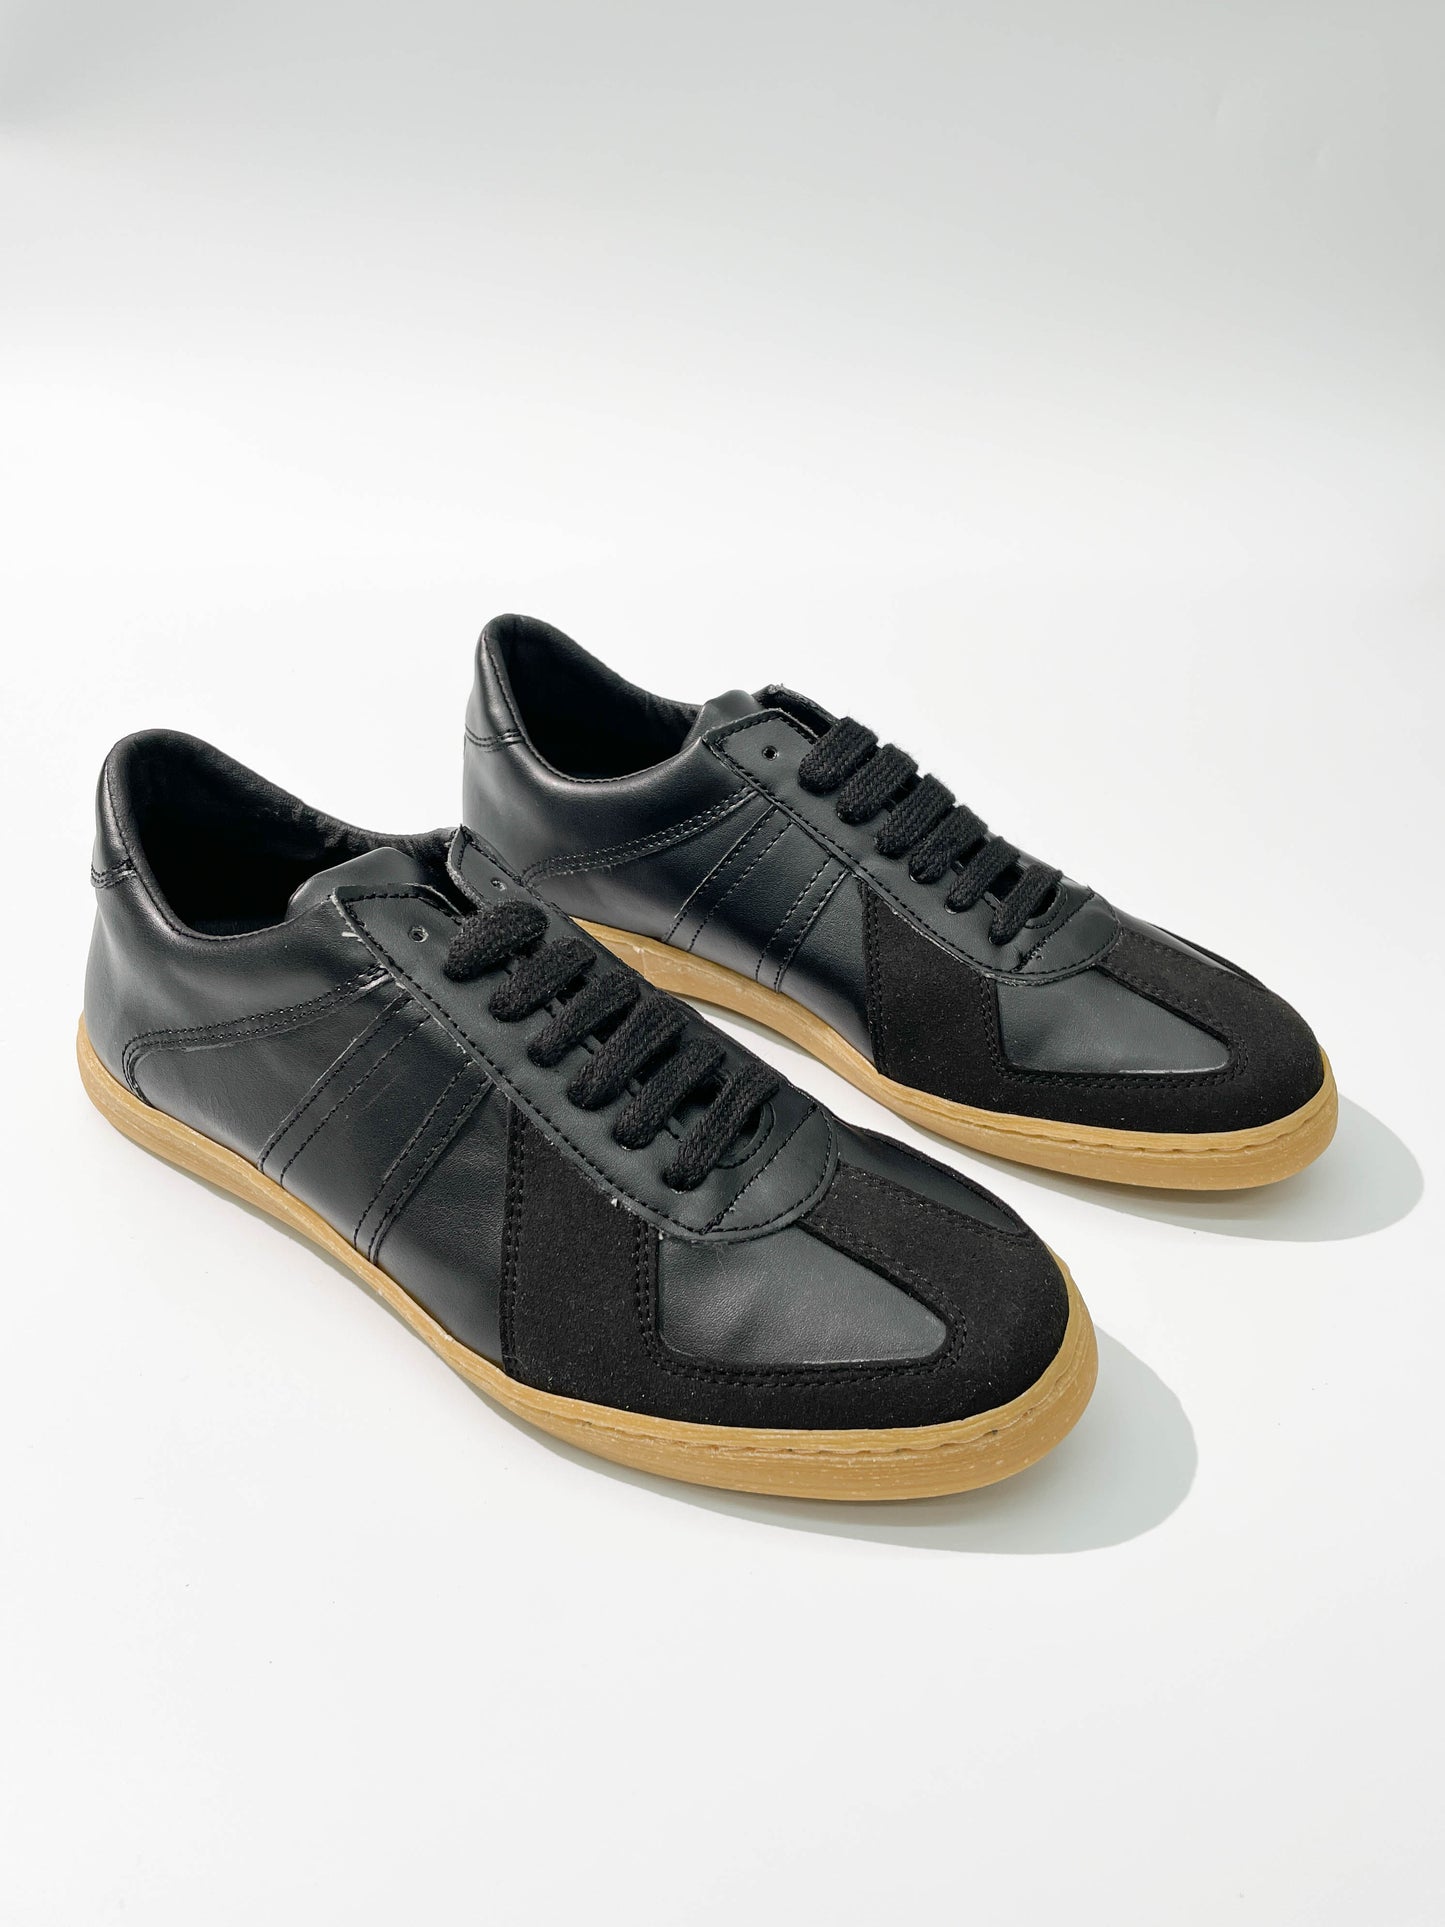 Vegancraft 100% Vegan German Army Trainer Shoes Made In Spain (Black)